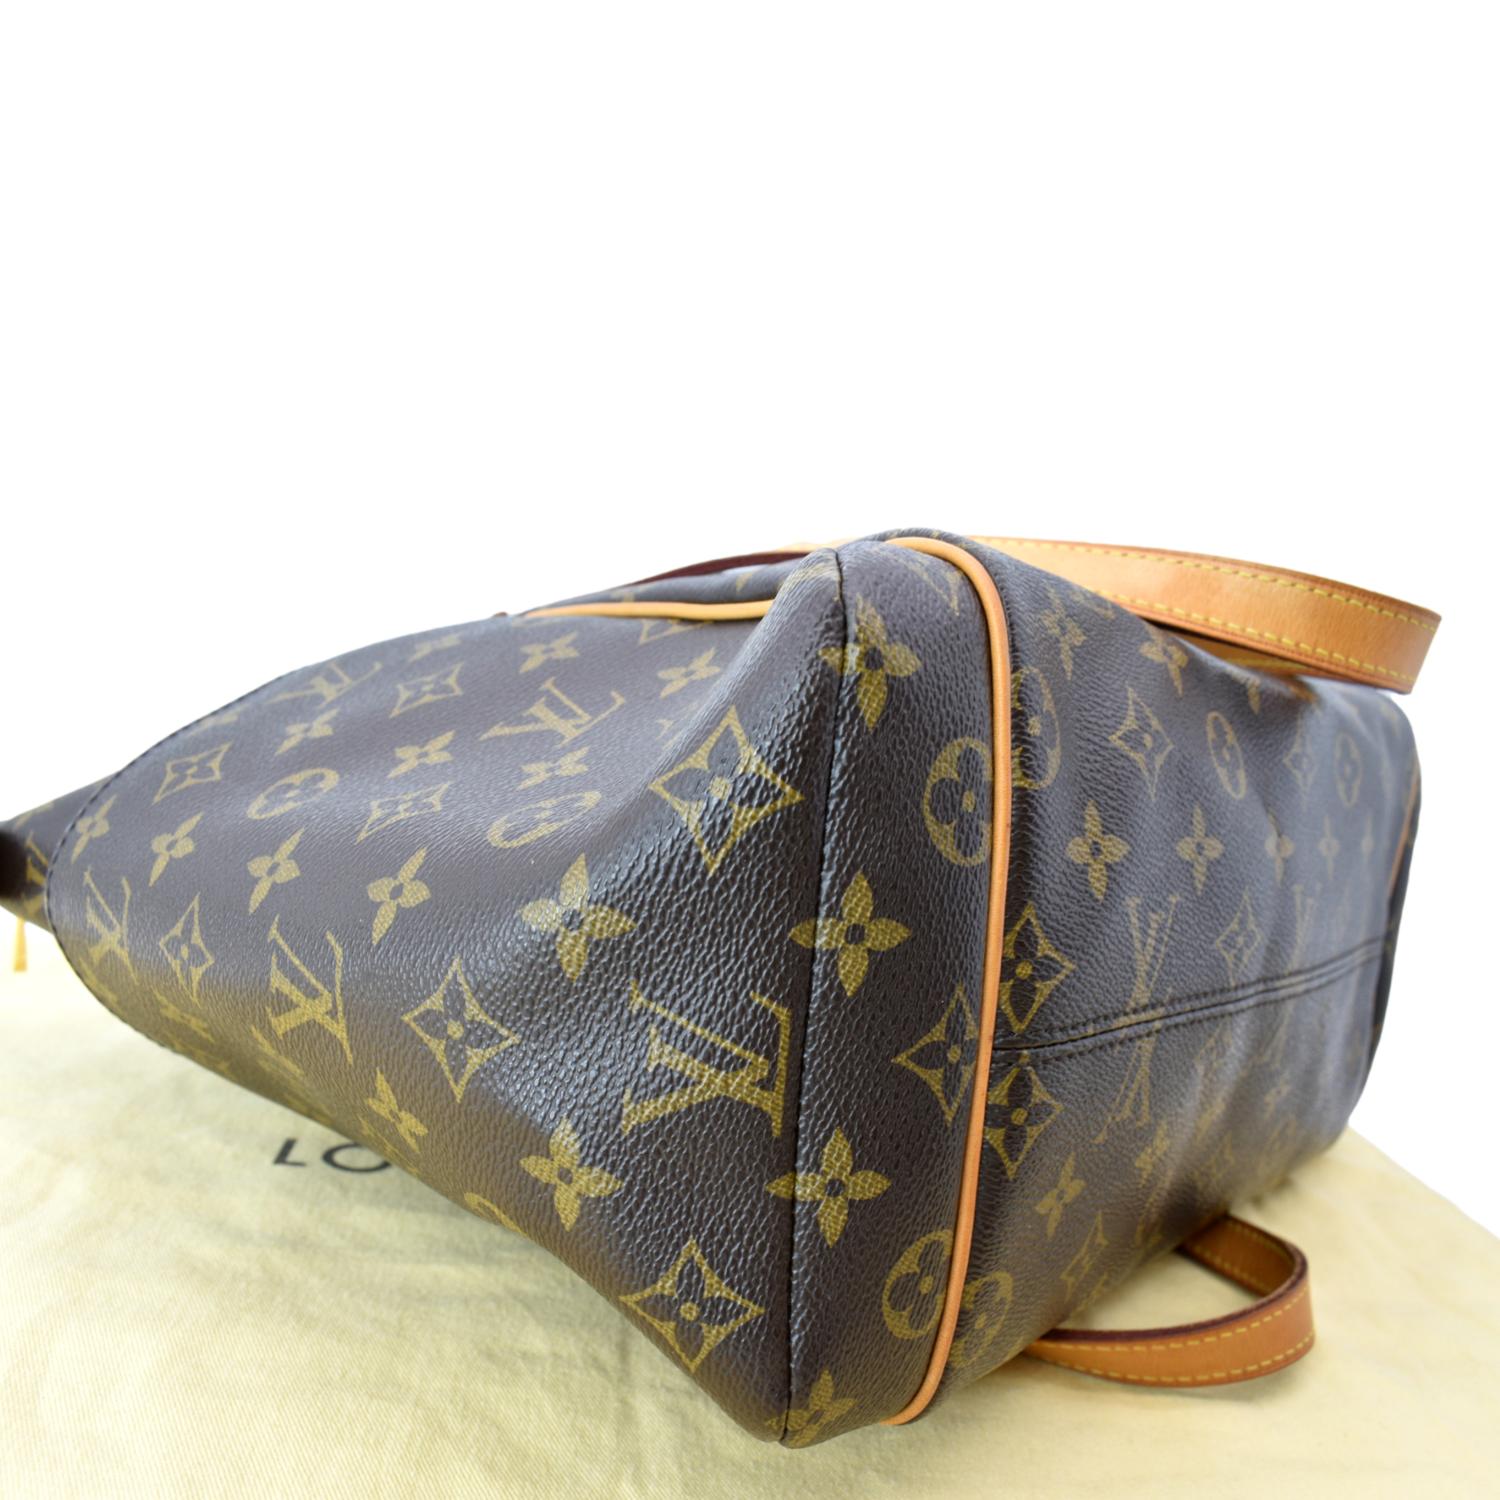 Louis Vuitton 2013 Pre-owned District mm Shoulder Bag - Brown